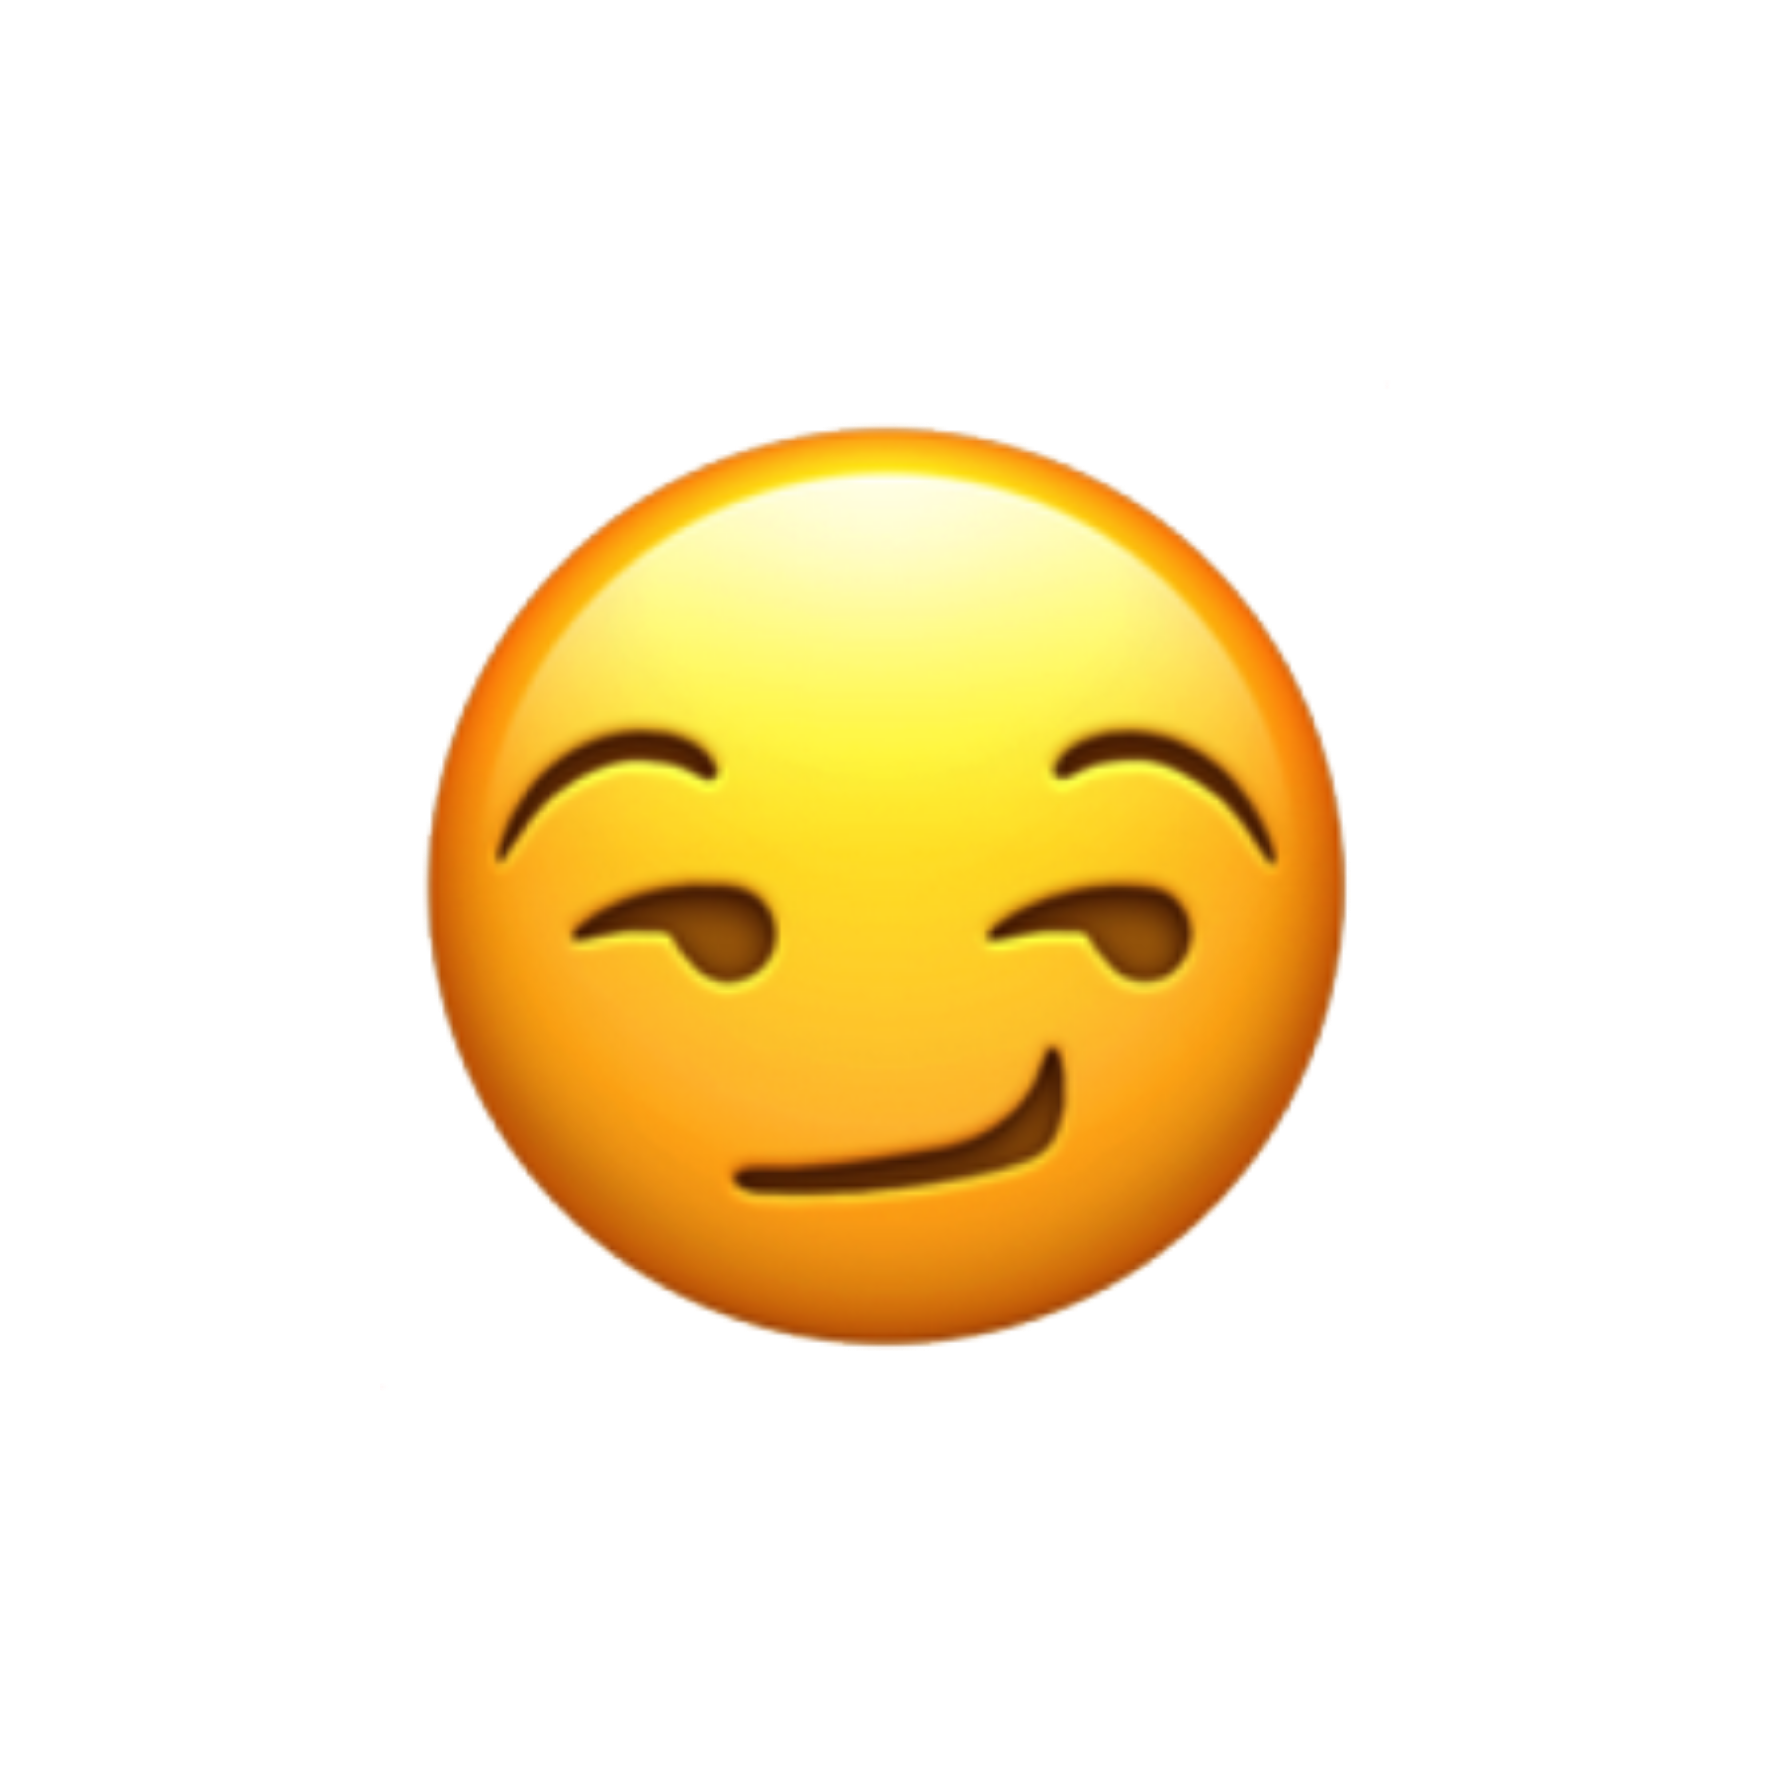 Sticker Emoji Safado Freetoedit Sticker By Lettydornelles